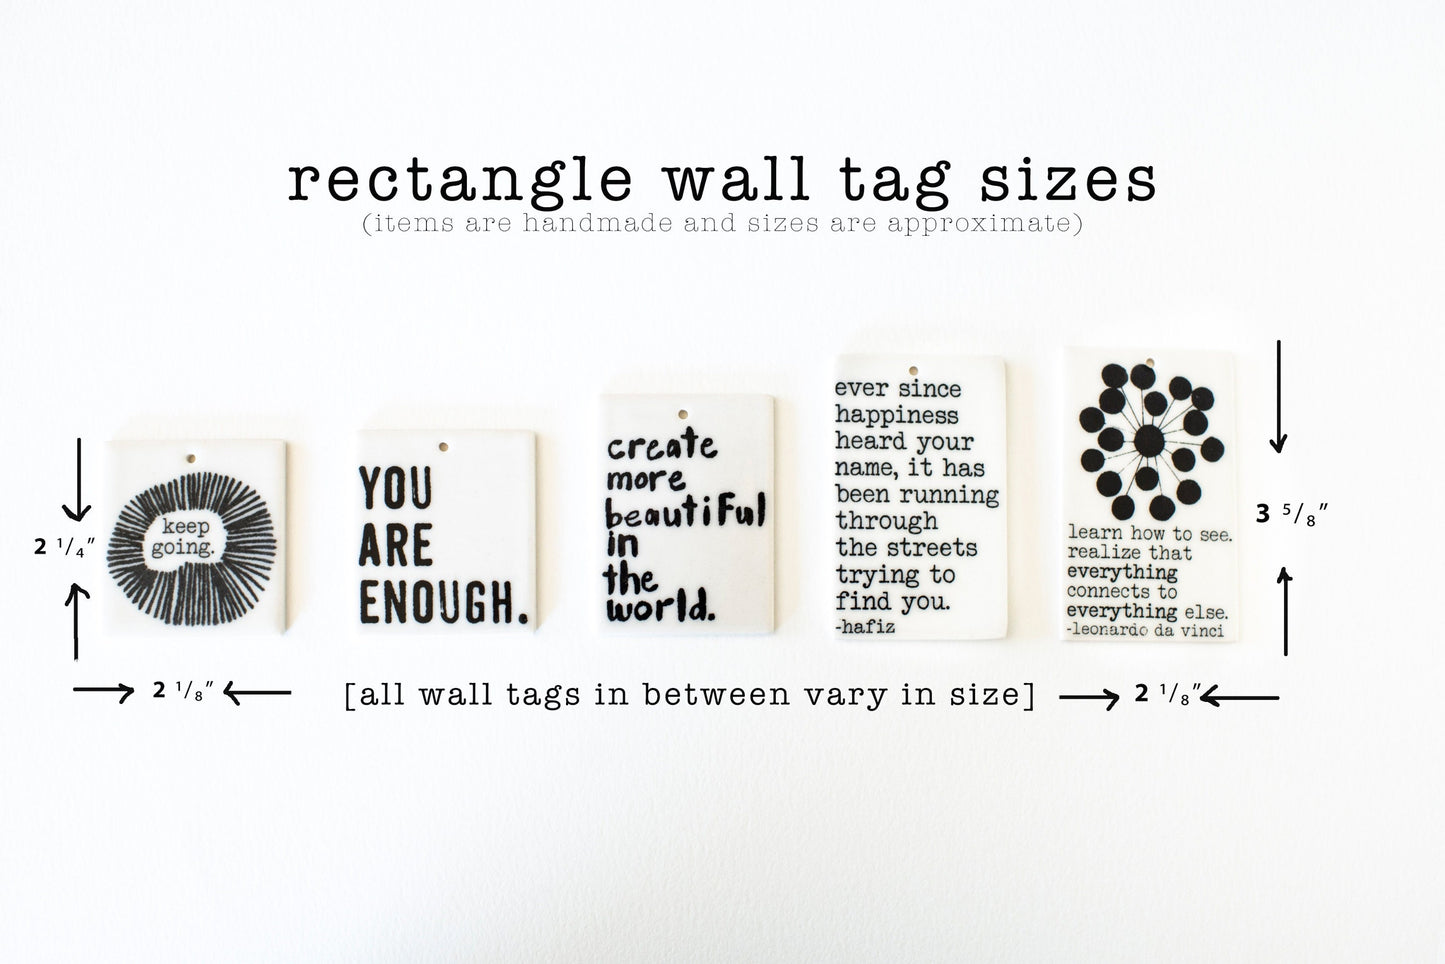 start somewhere ceramic wall tag